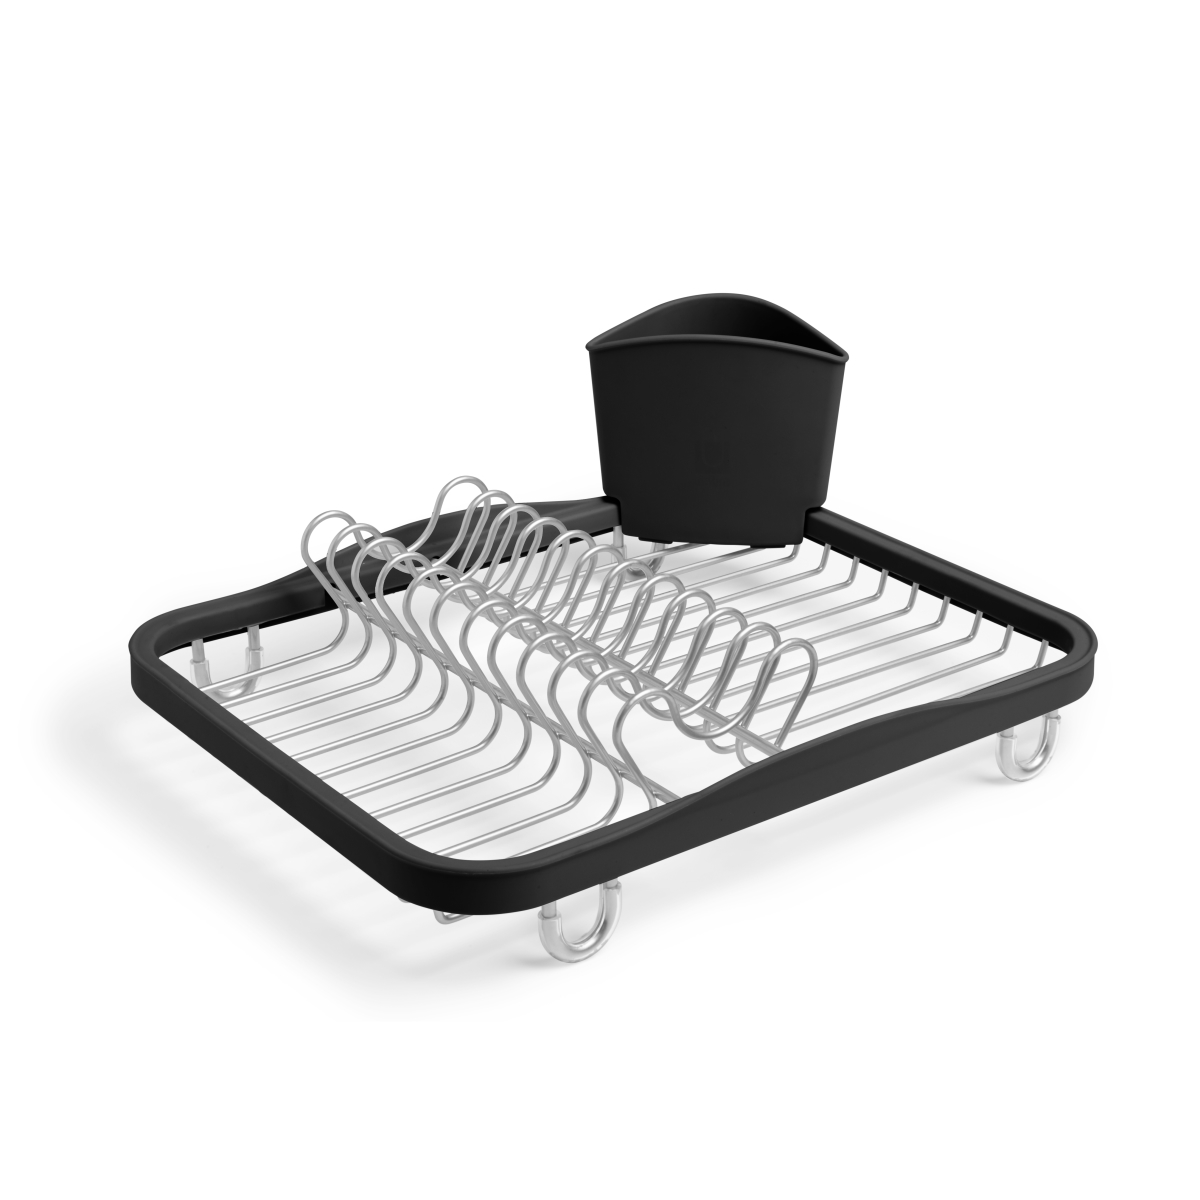 Picture of Umbra 330065-744 Sinkin Dish Drying Rack - Black & Smoke